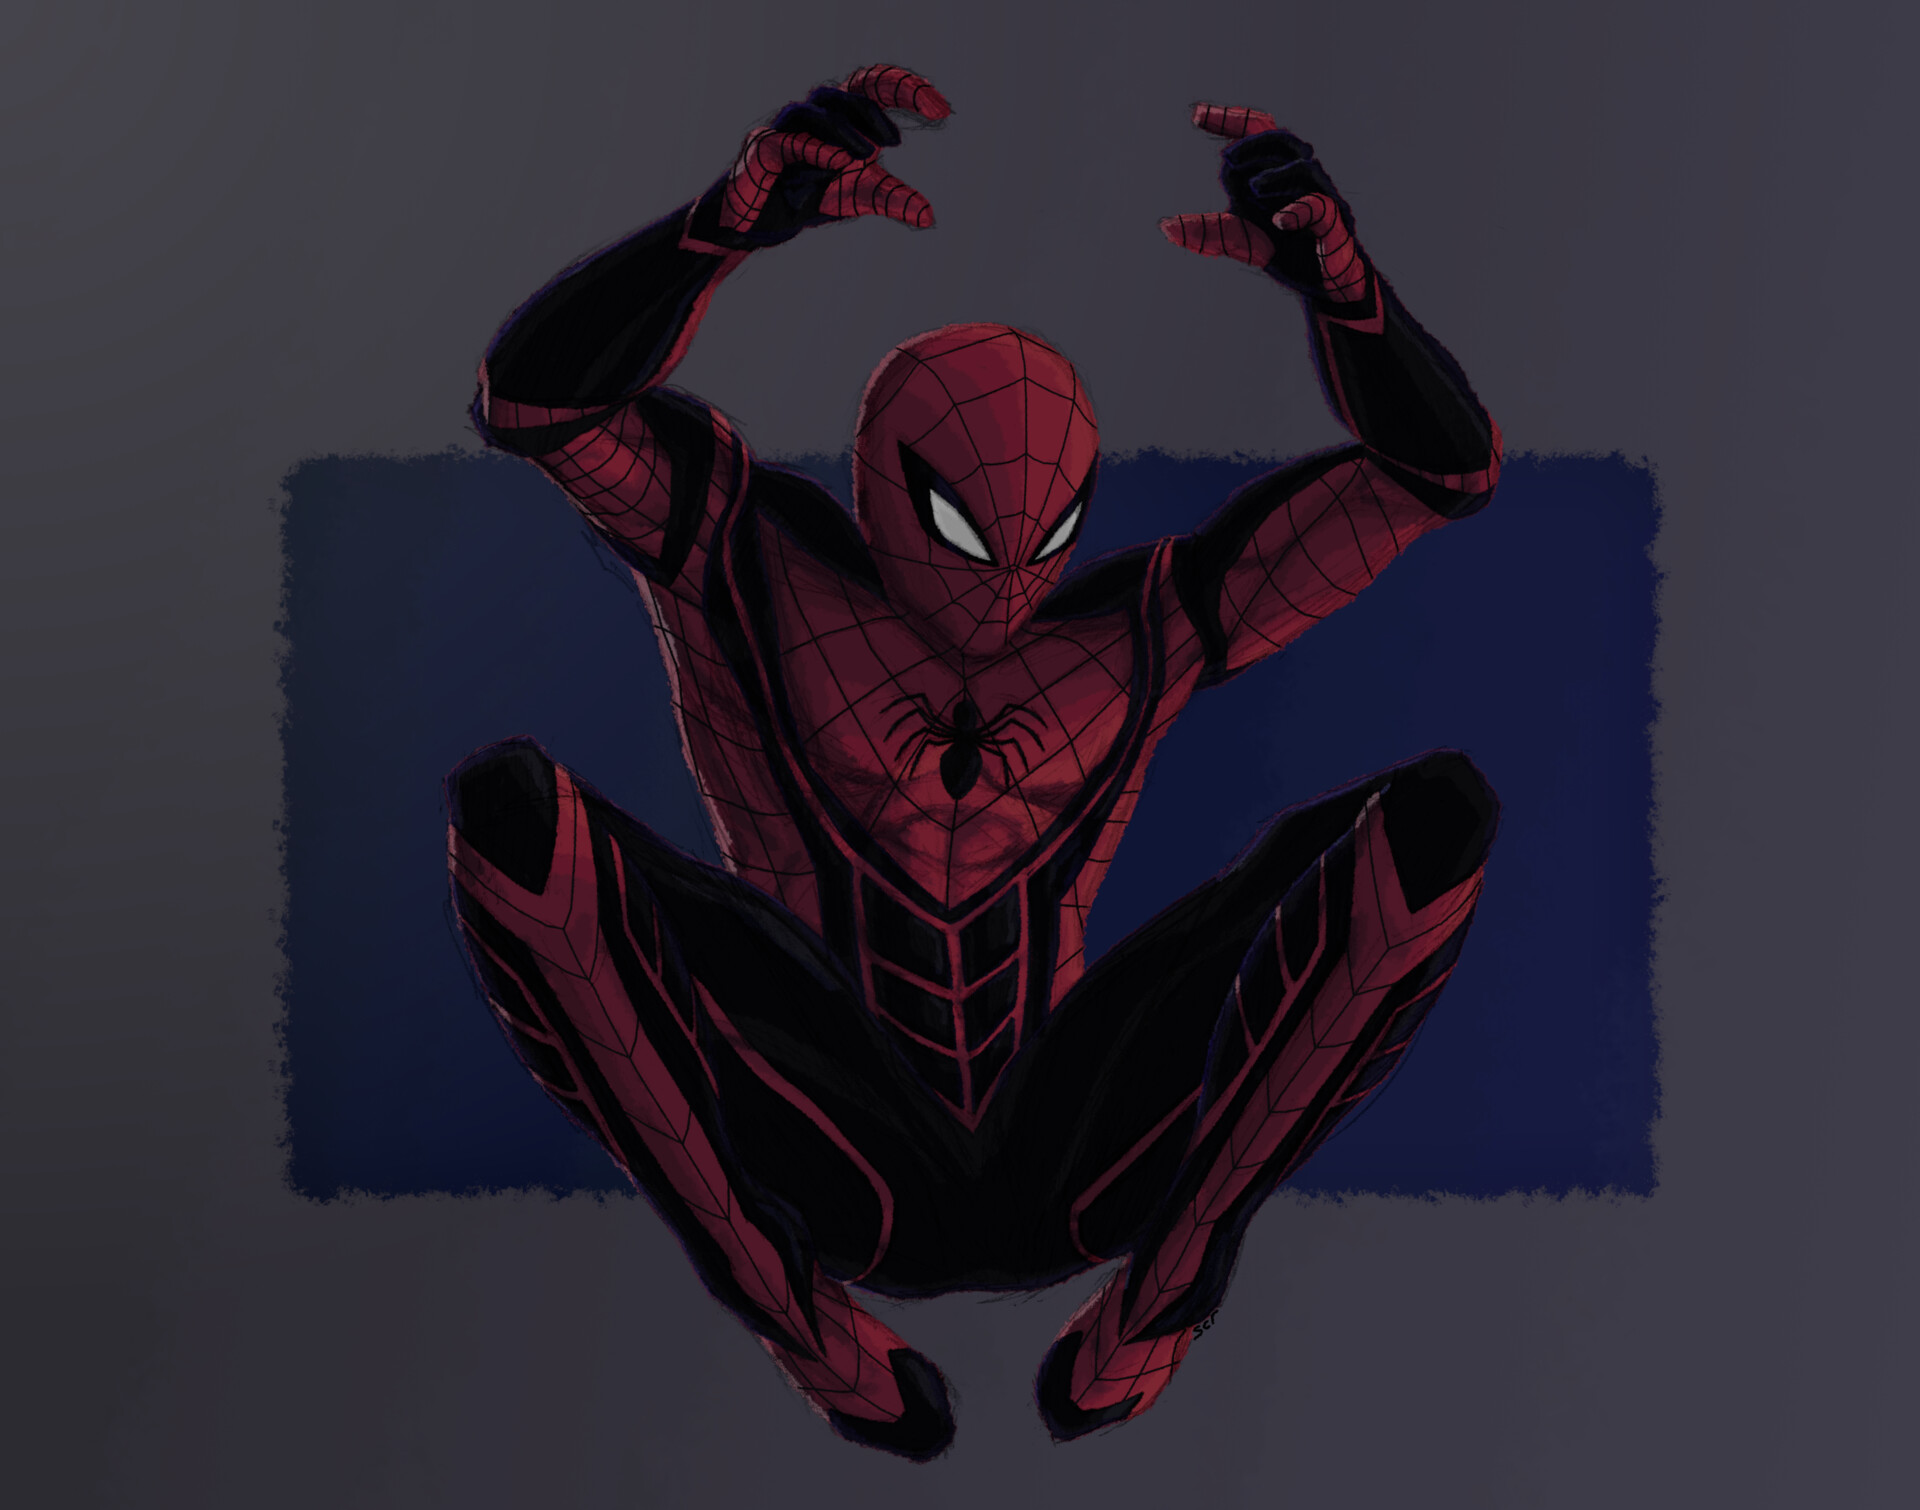 Spider-Man Minimal Artwork Wallpapers